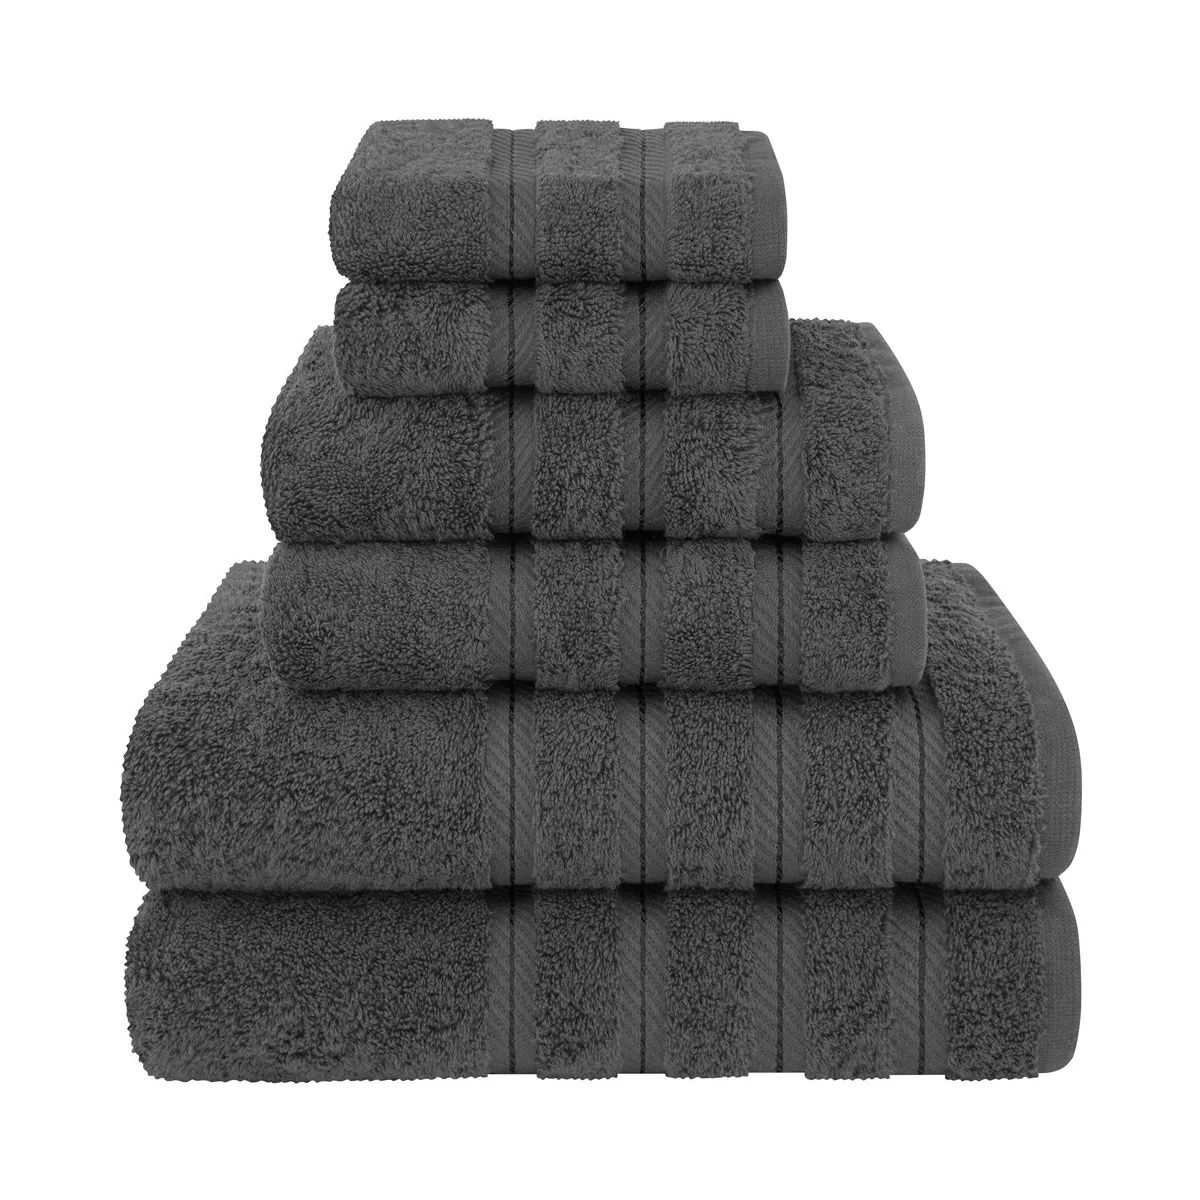 American Soft Linen Luxury 6 Piece Towel Set, 100% Cotton Soft Absorbent Bath Towels for Bathroom | Target